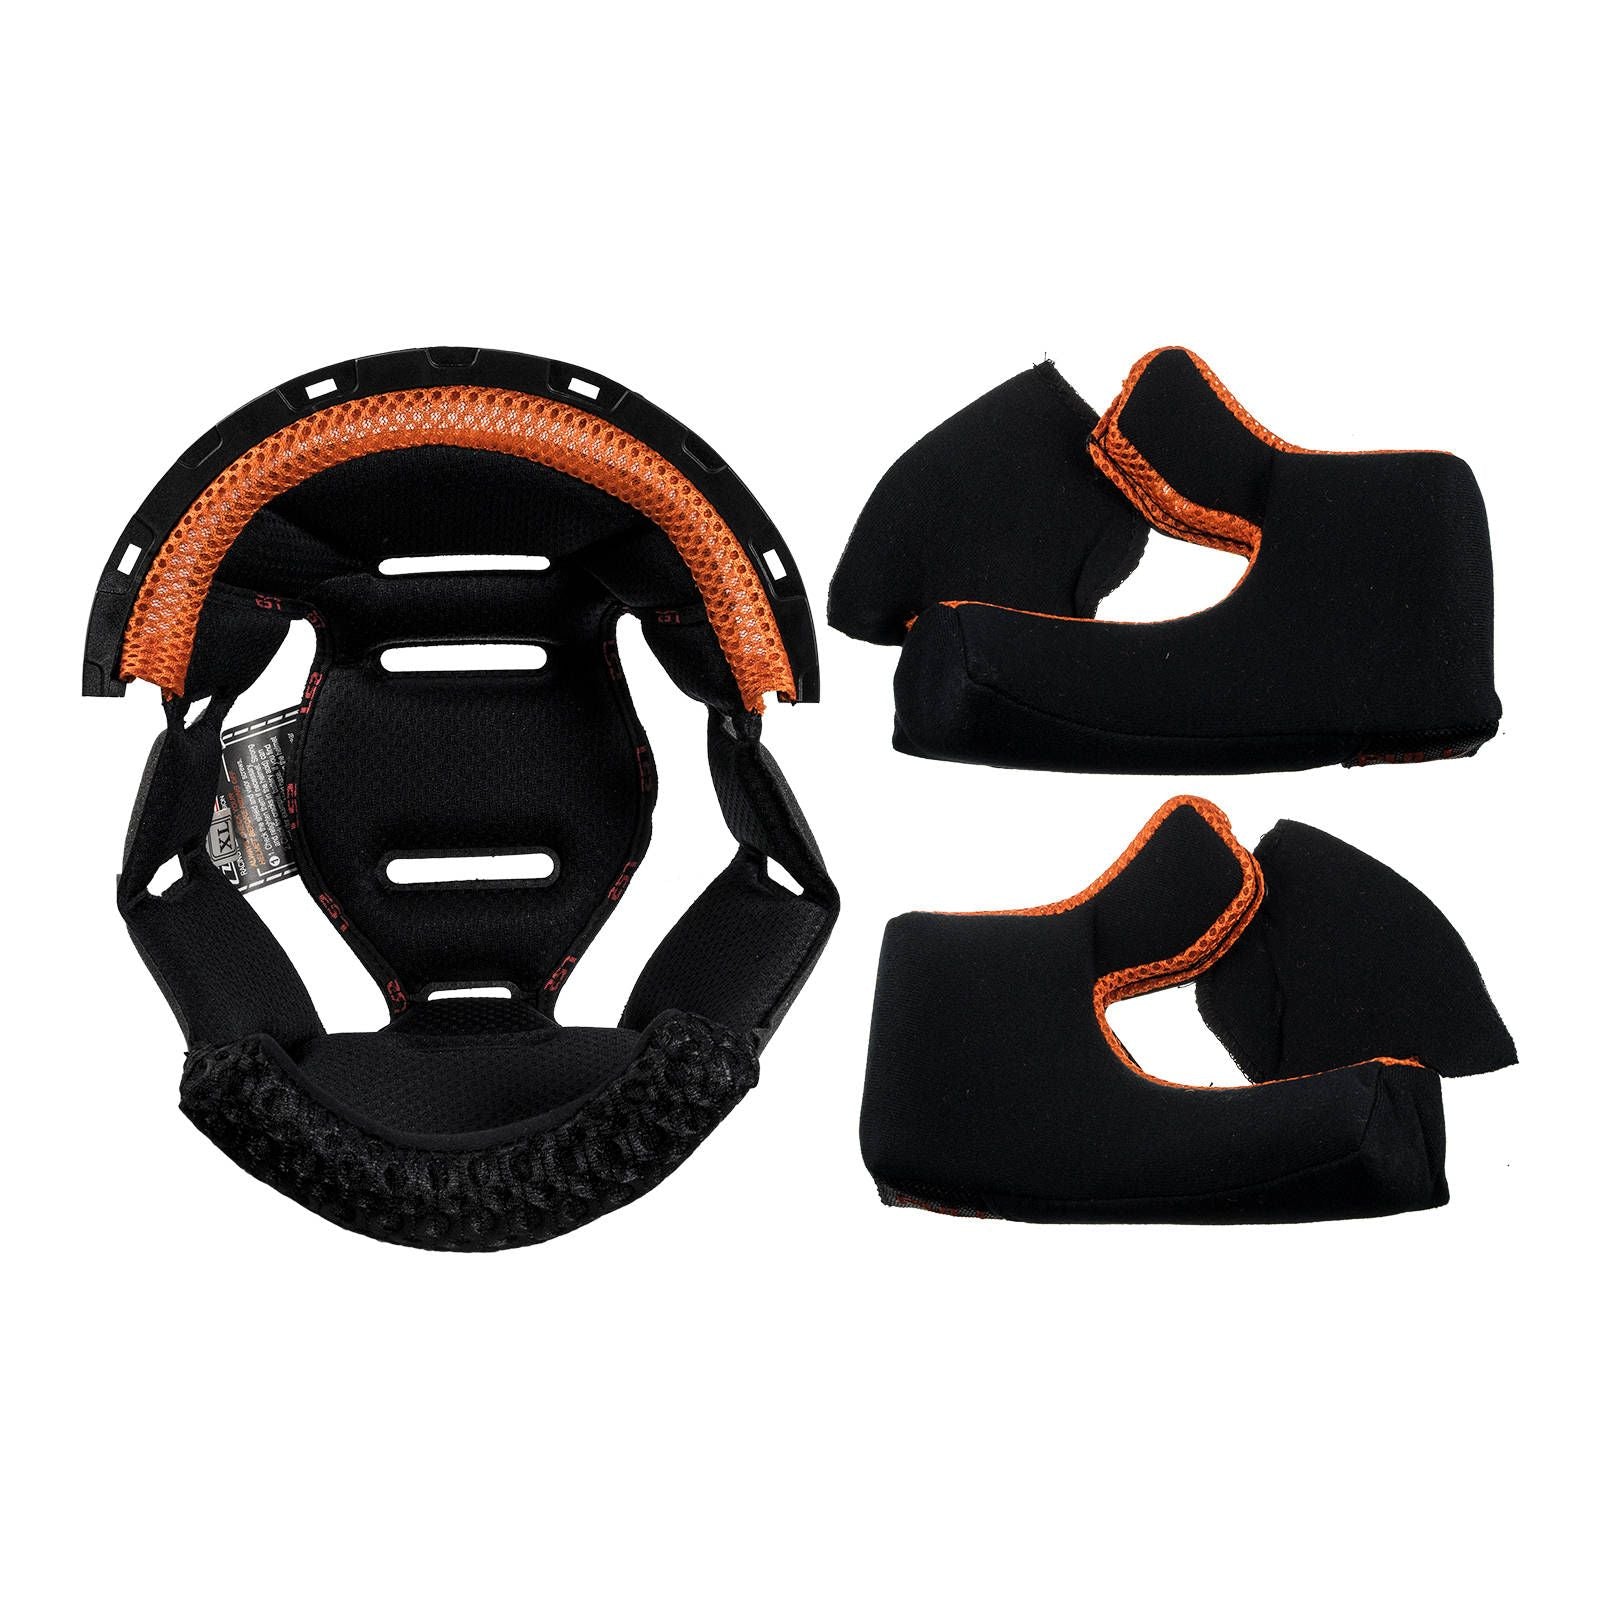 New LS2 MX436 Pioneer Helmet Liner / Cheek Pad Set - 2XL #LS2Z800104362XL